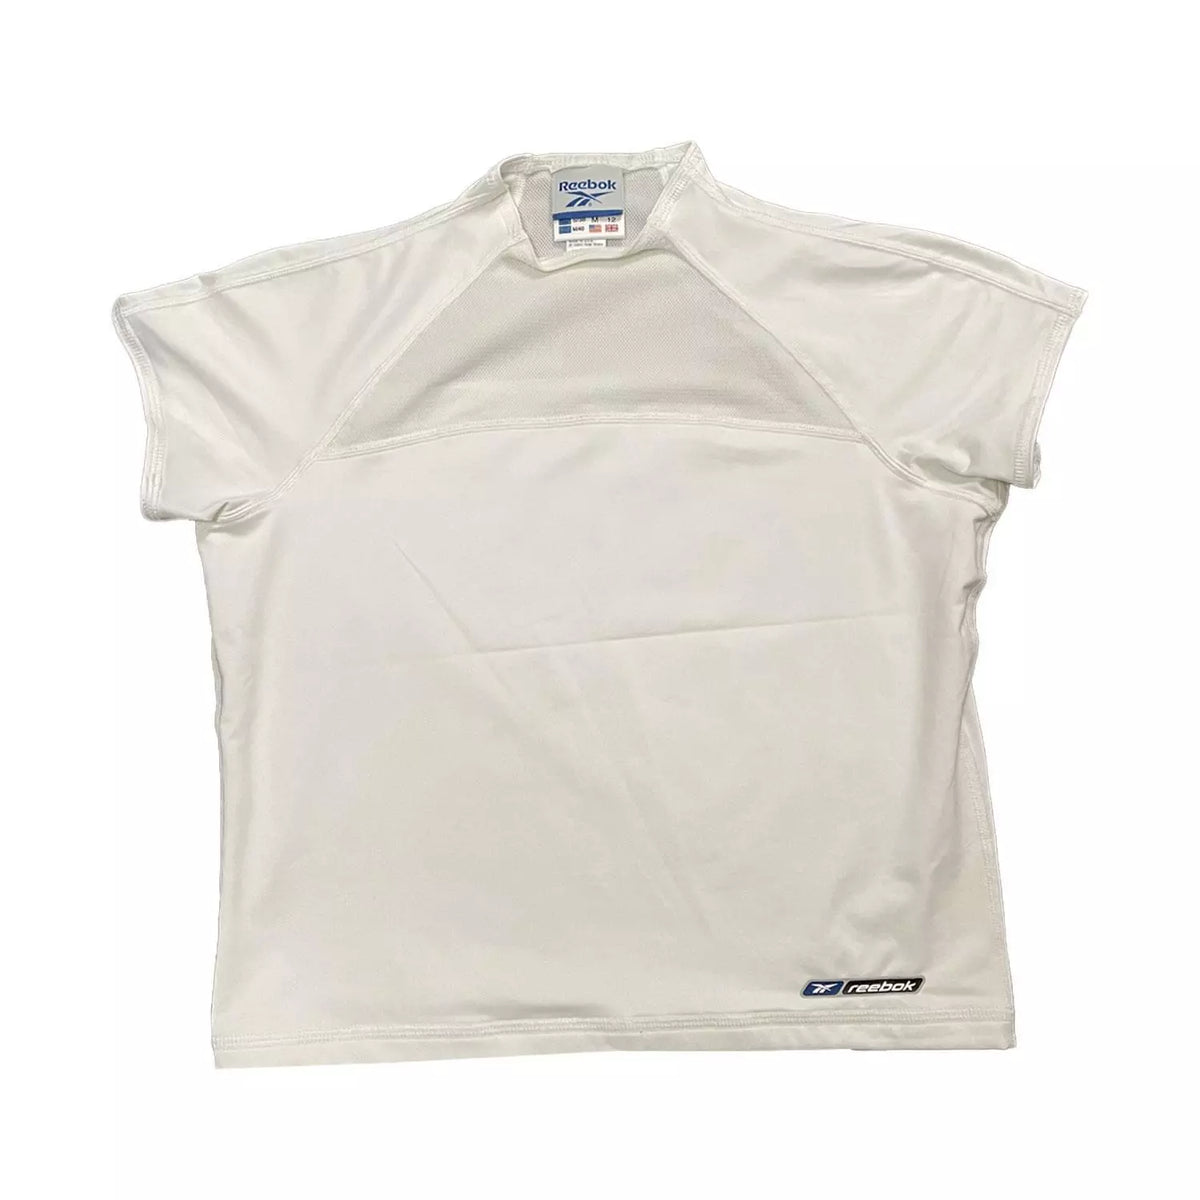 Reebok Womens Athletics High Neck T-Shirt - White - UK Size 12